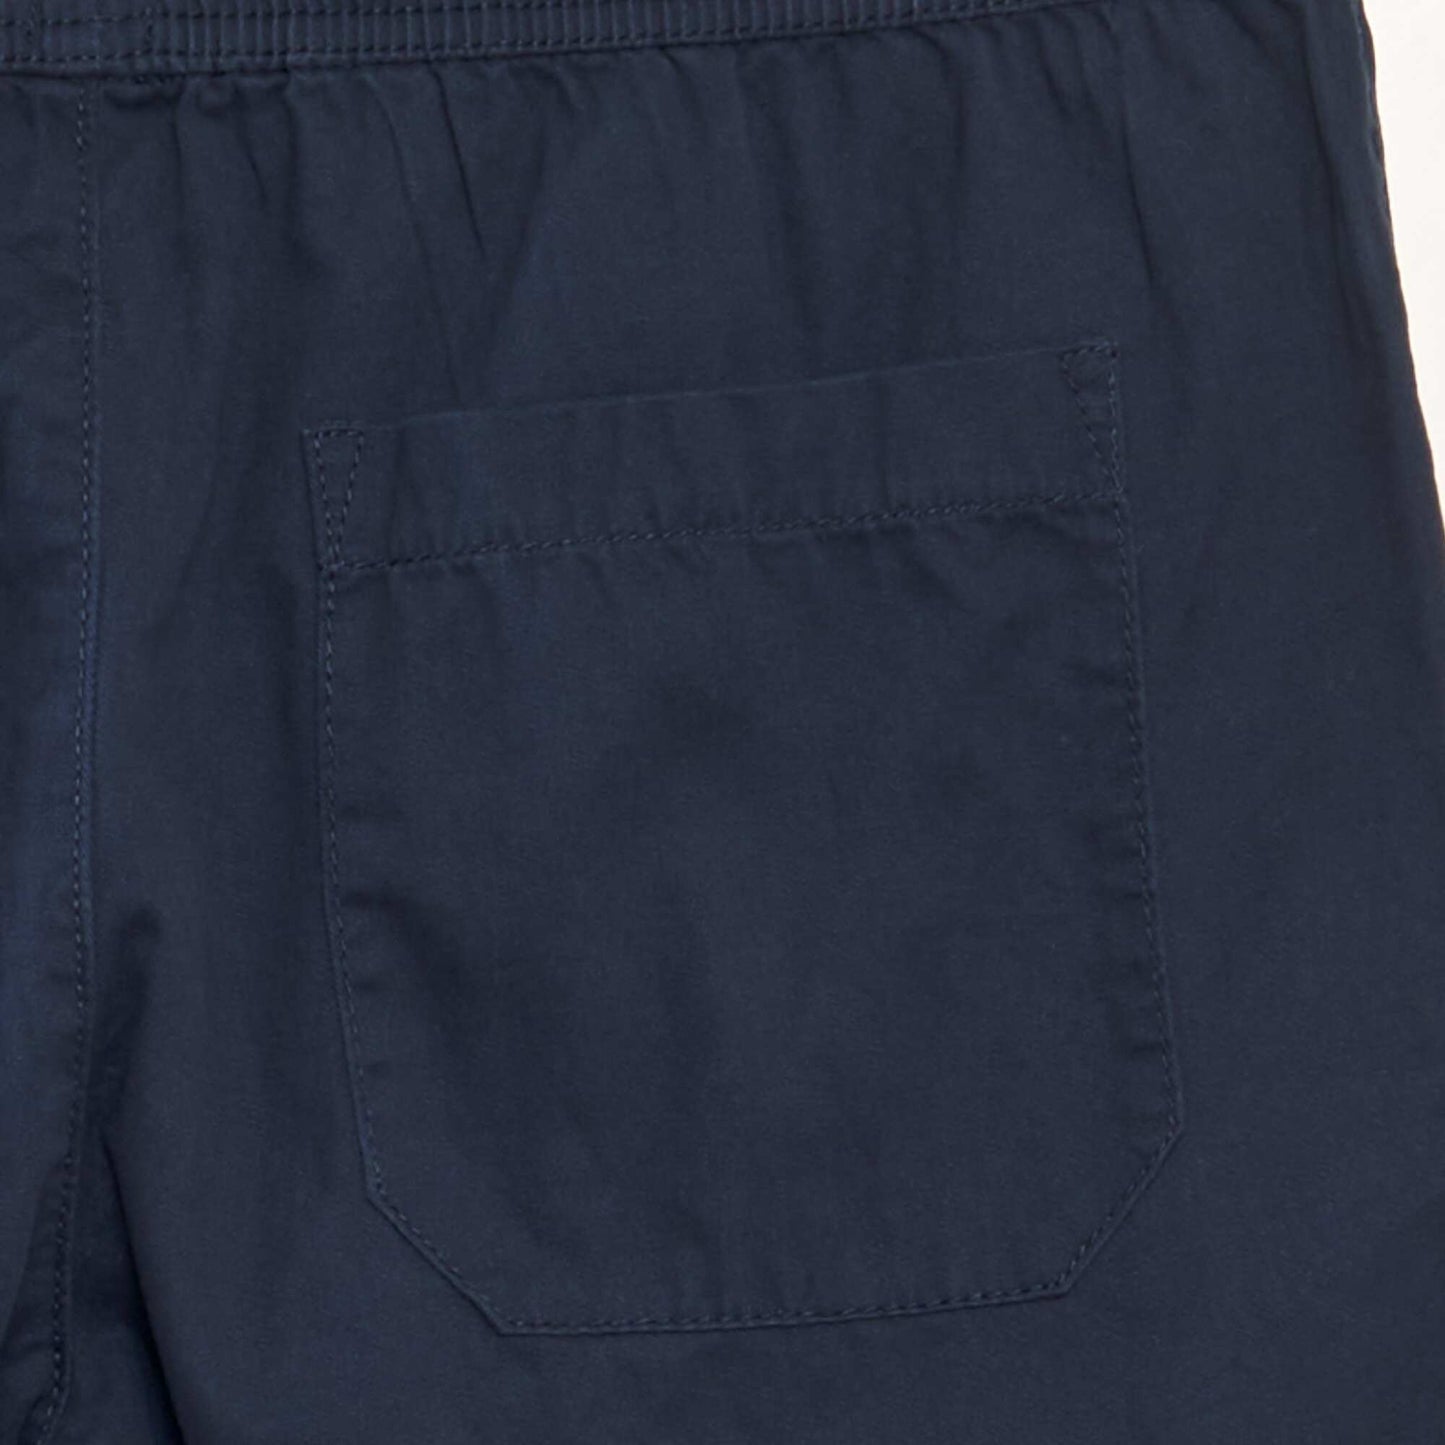 Chino Bermuda shorts with elasticated waist blue